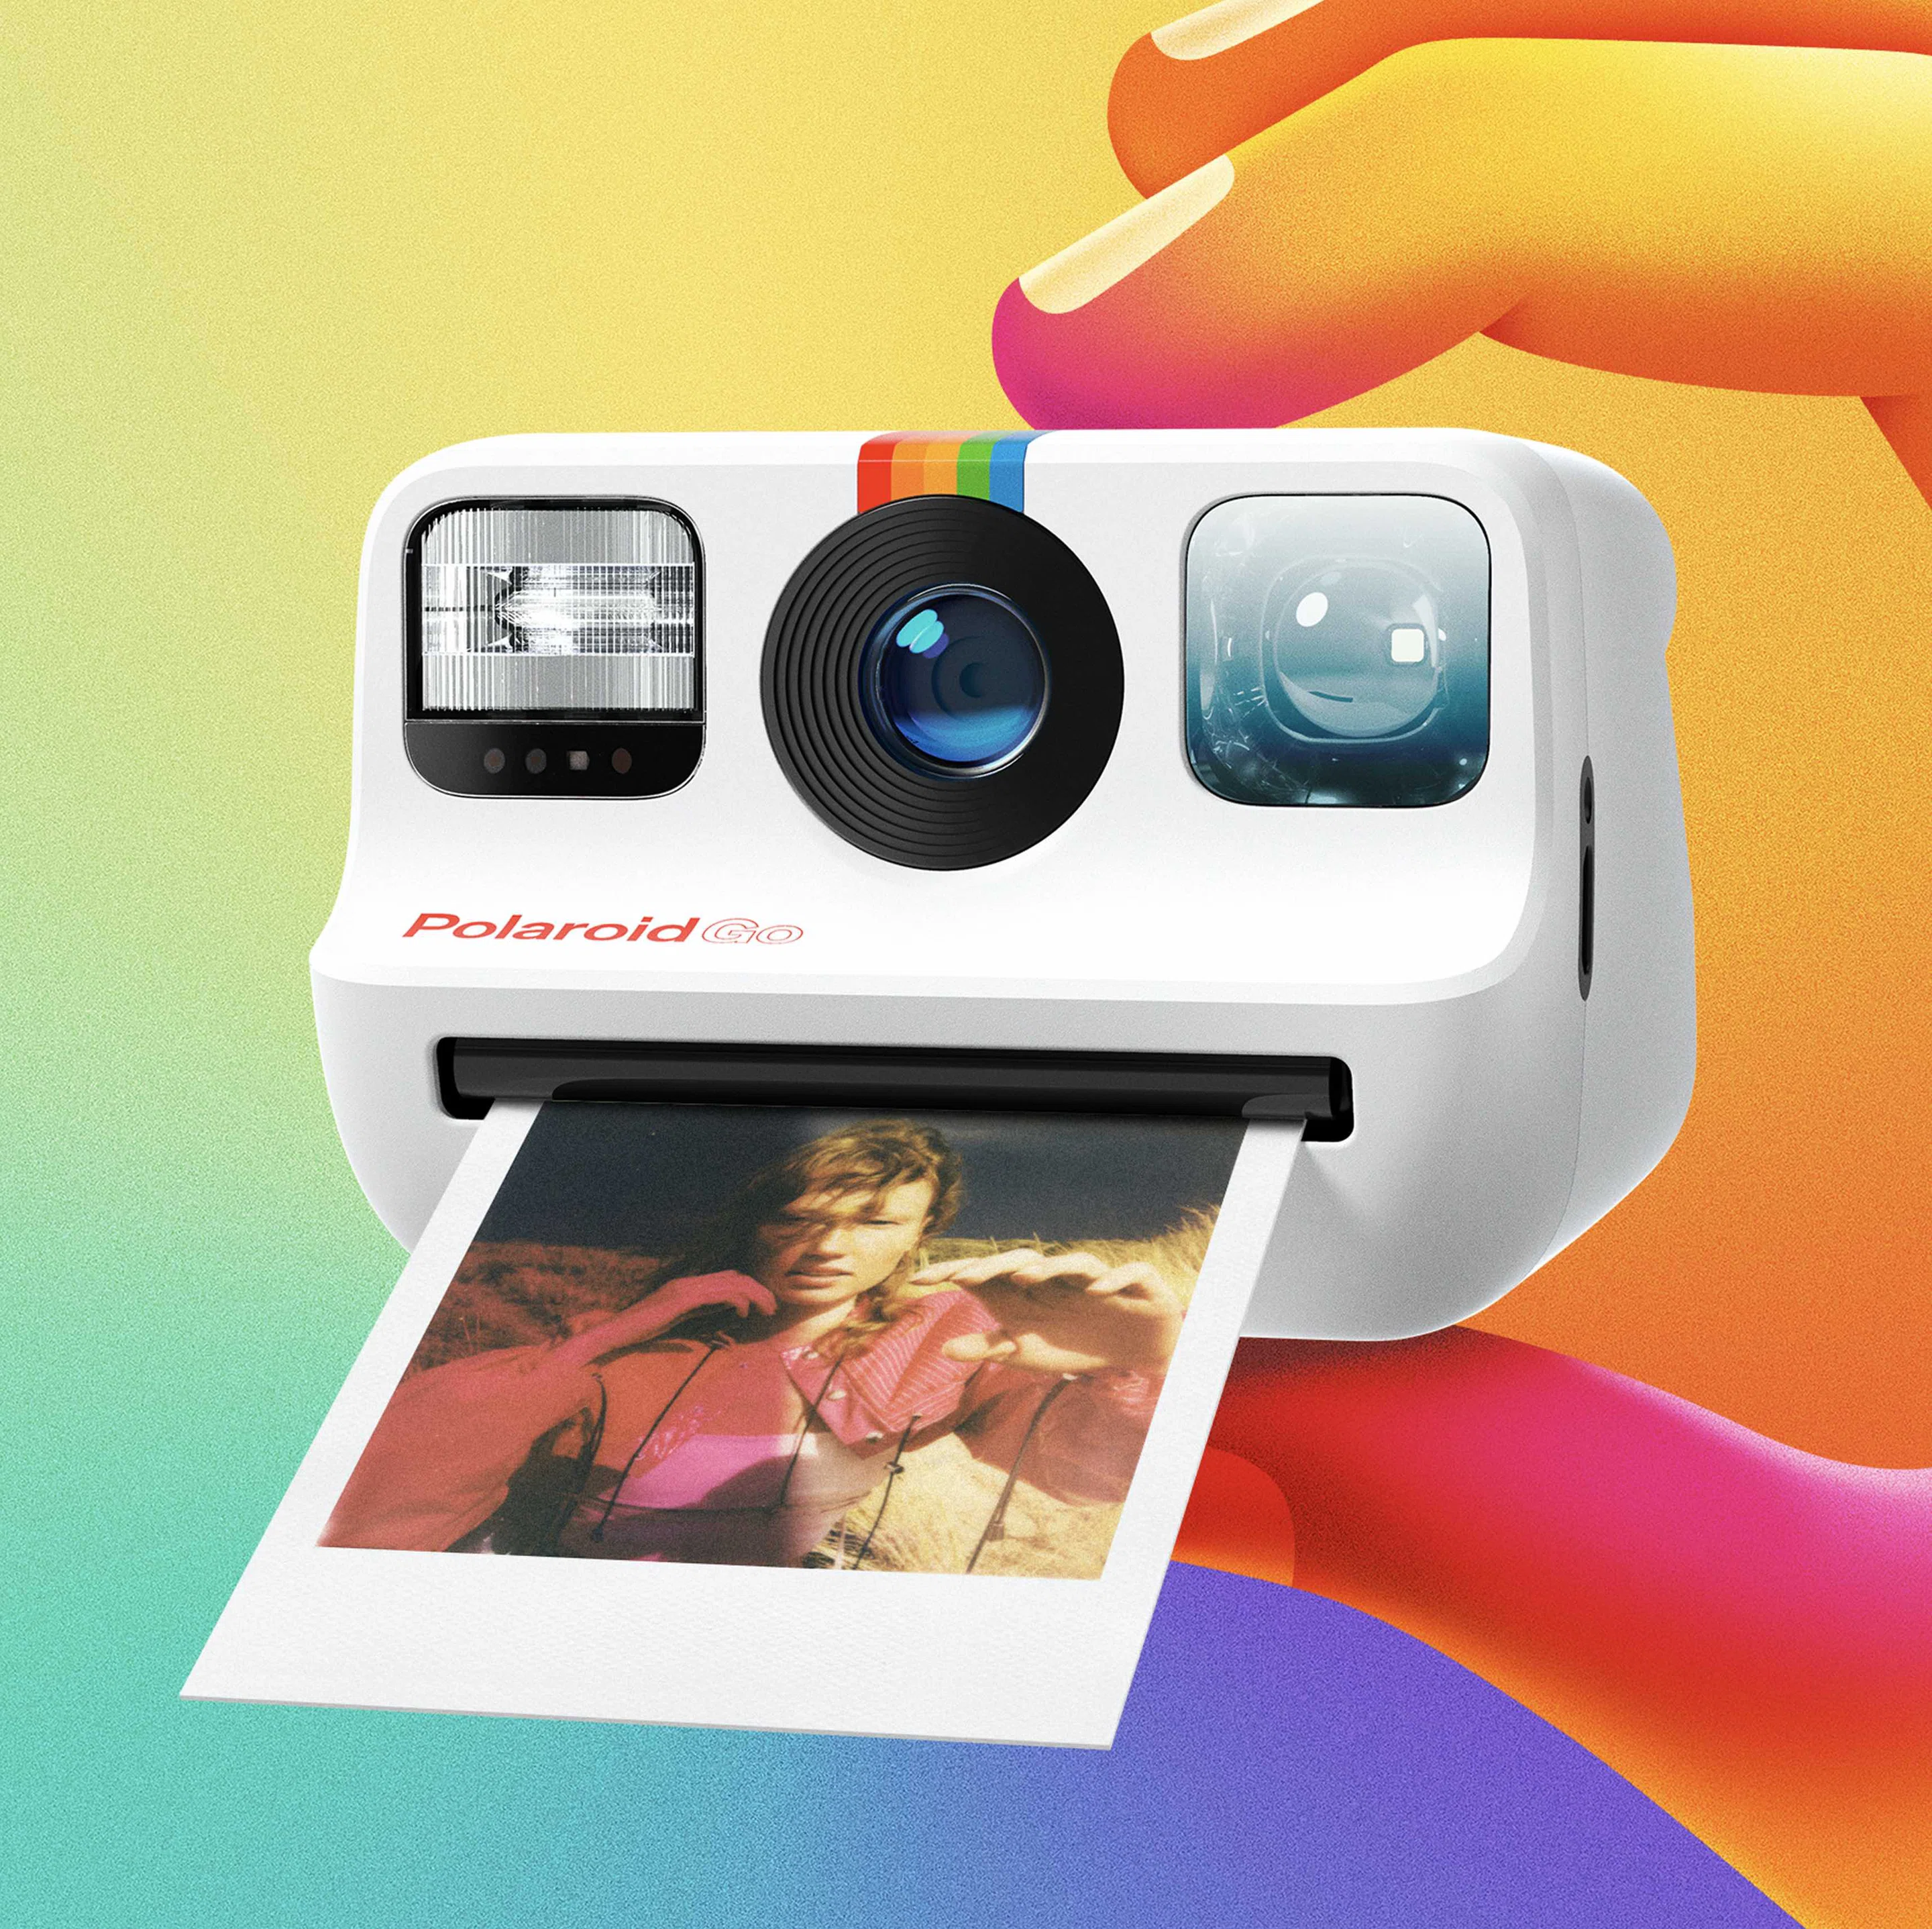 Polaroid releases smallest analogue instant camera, Polaroid Go